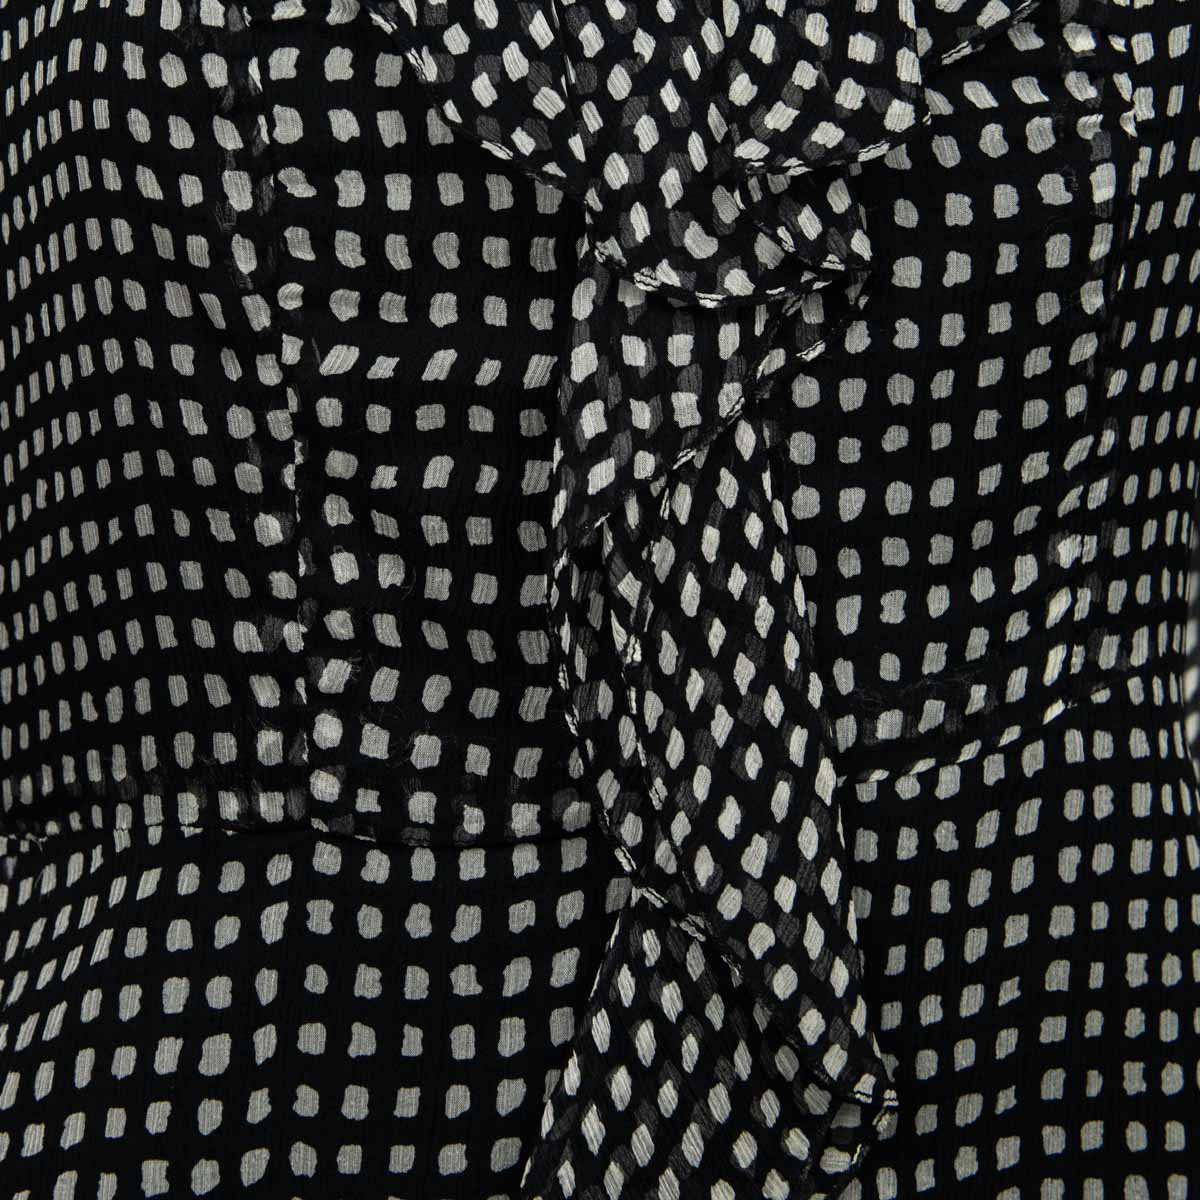 Carolina Herrera Black & White Silk Polka Dot Ruffle Dress